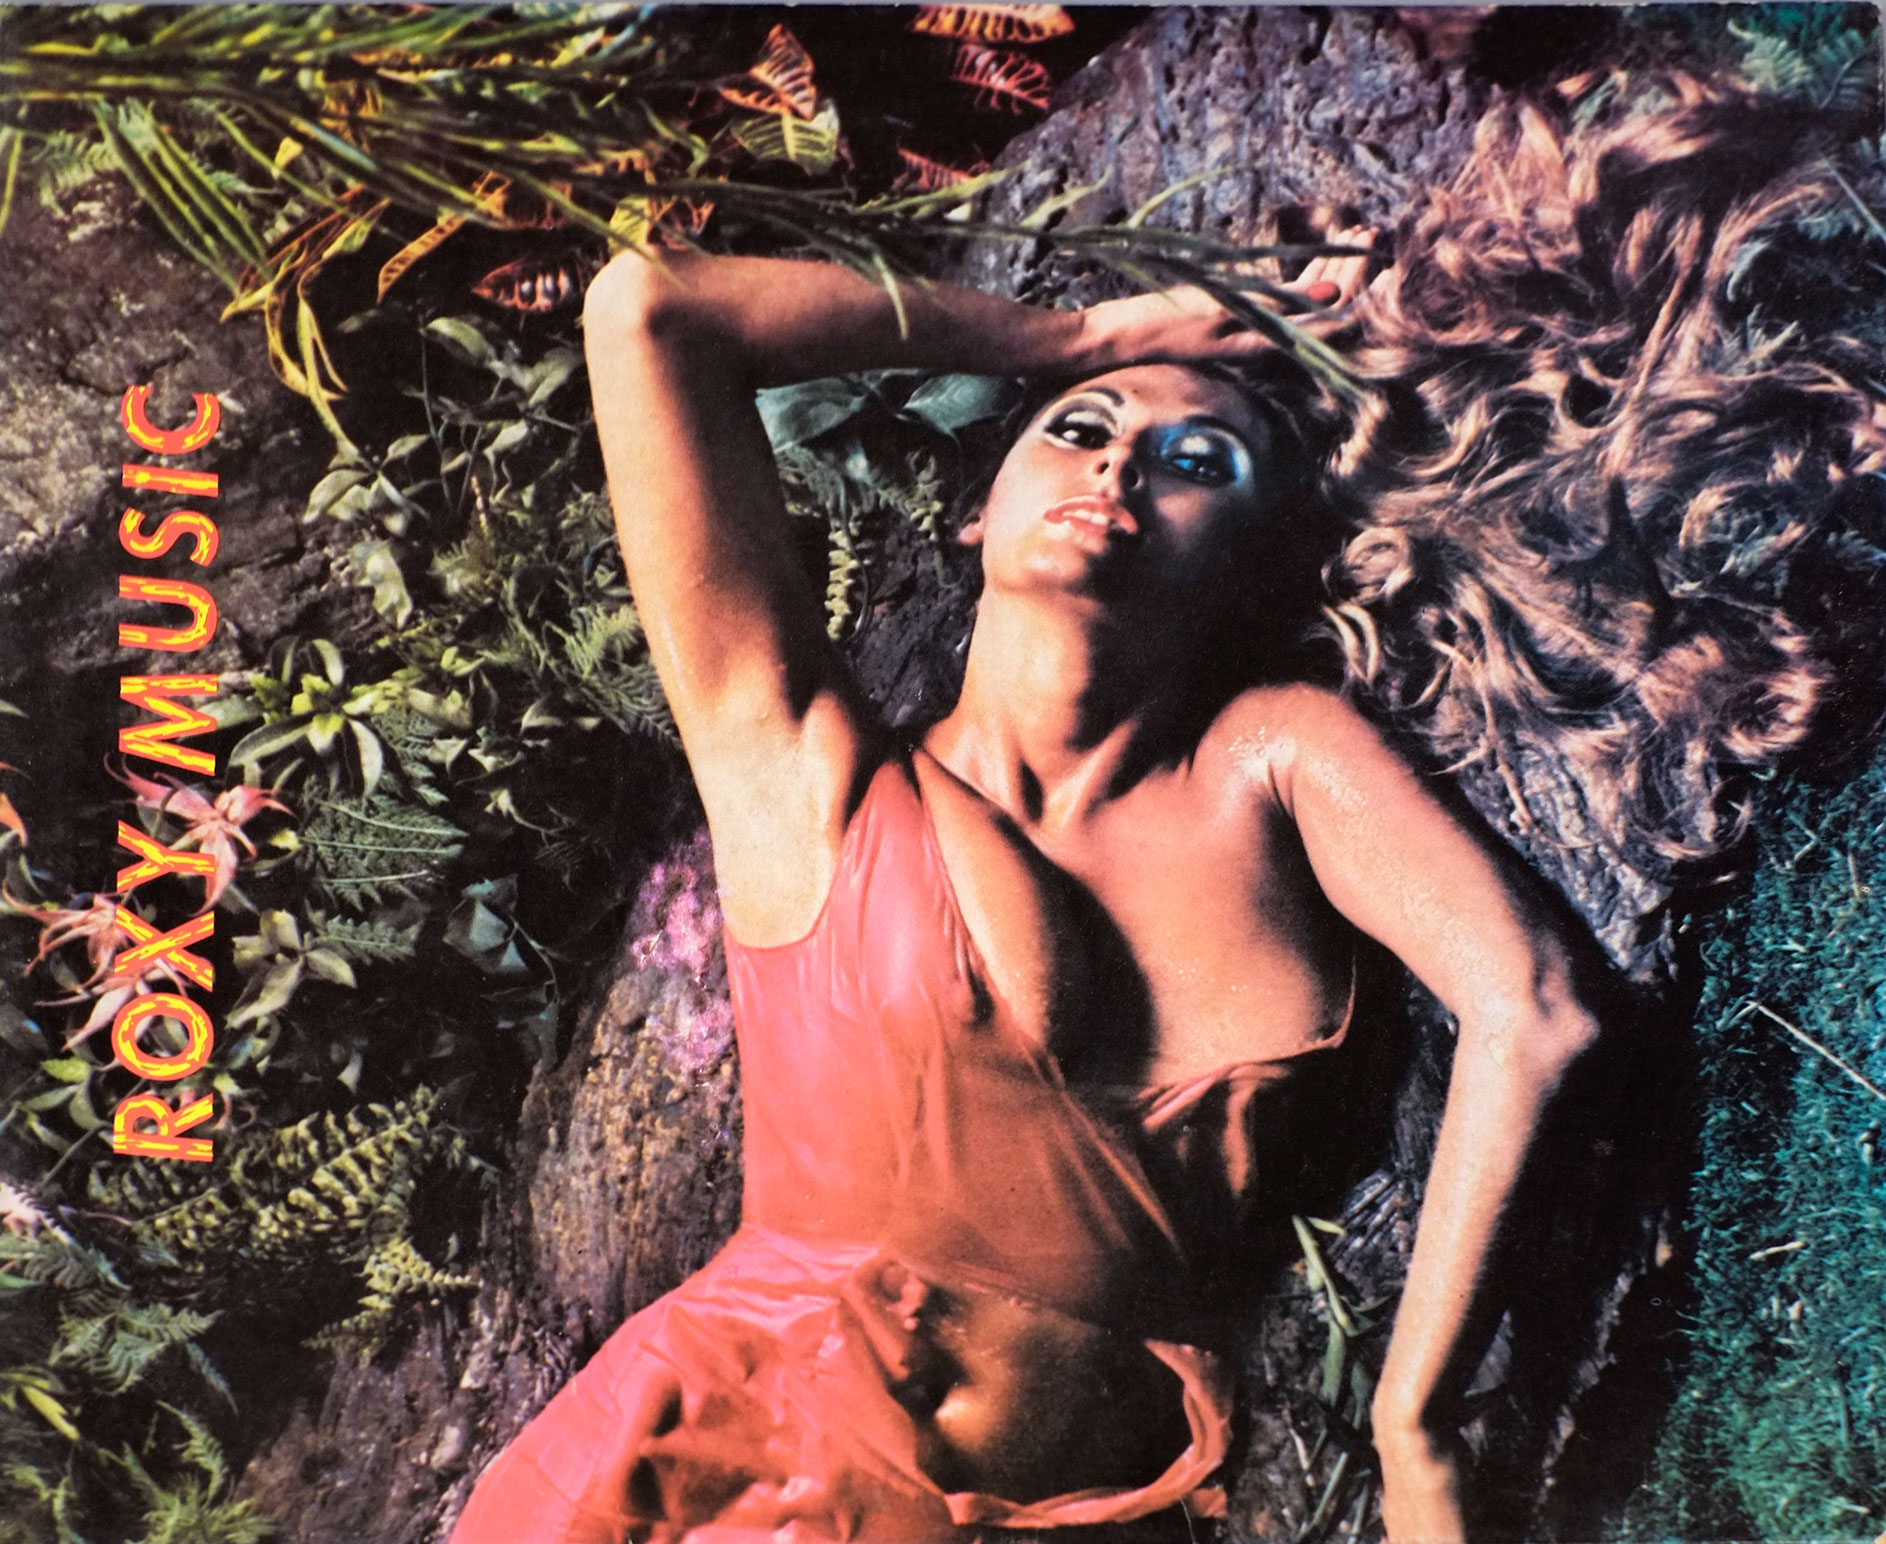 large photo of the album front cover of: ROXY MUSIC - STRANDED - GATEFOLD 12" LP VINYL ALBUM 